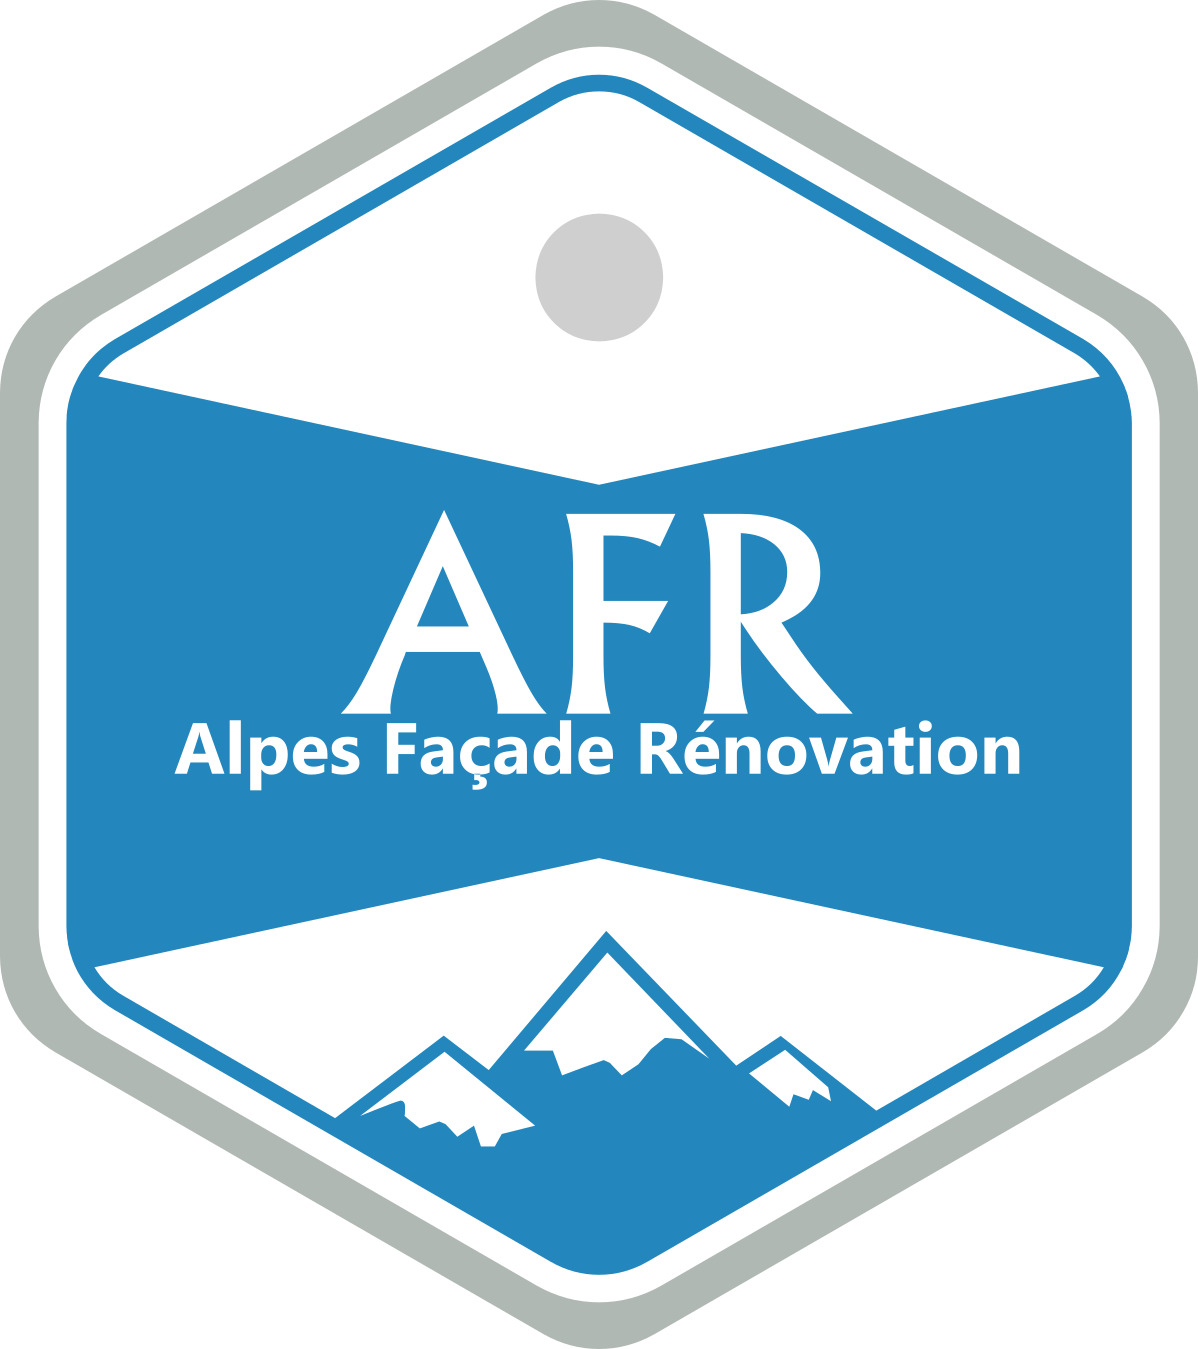 AFR - Alpes Façade Rénovation